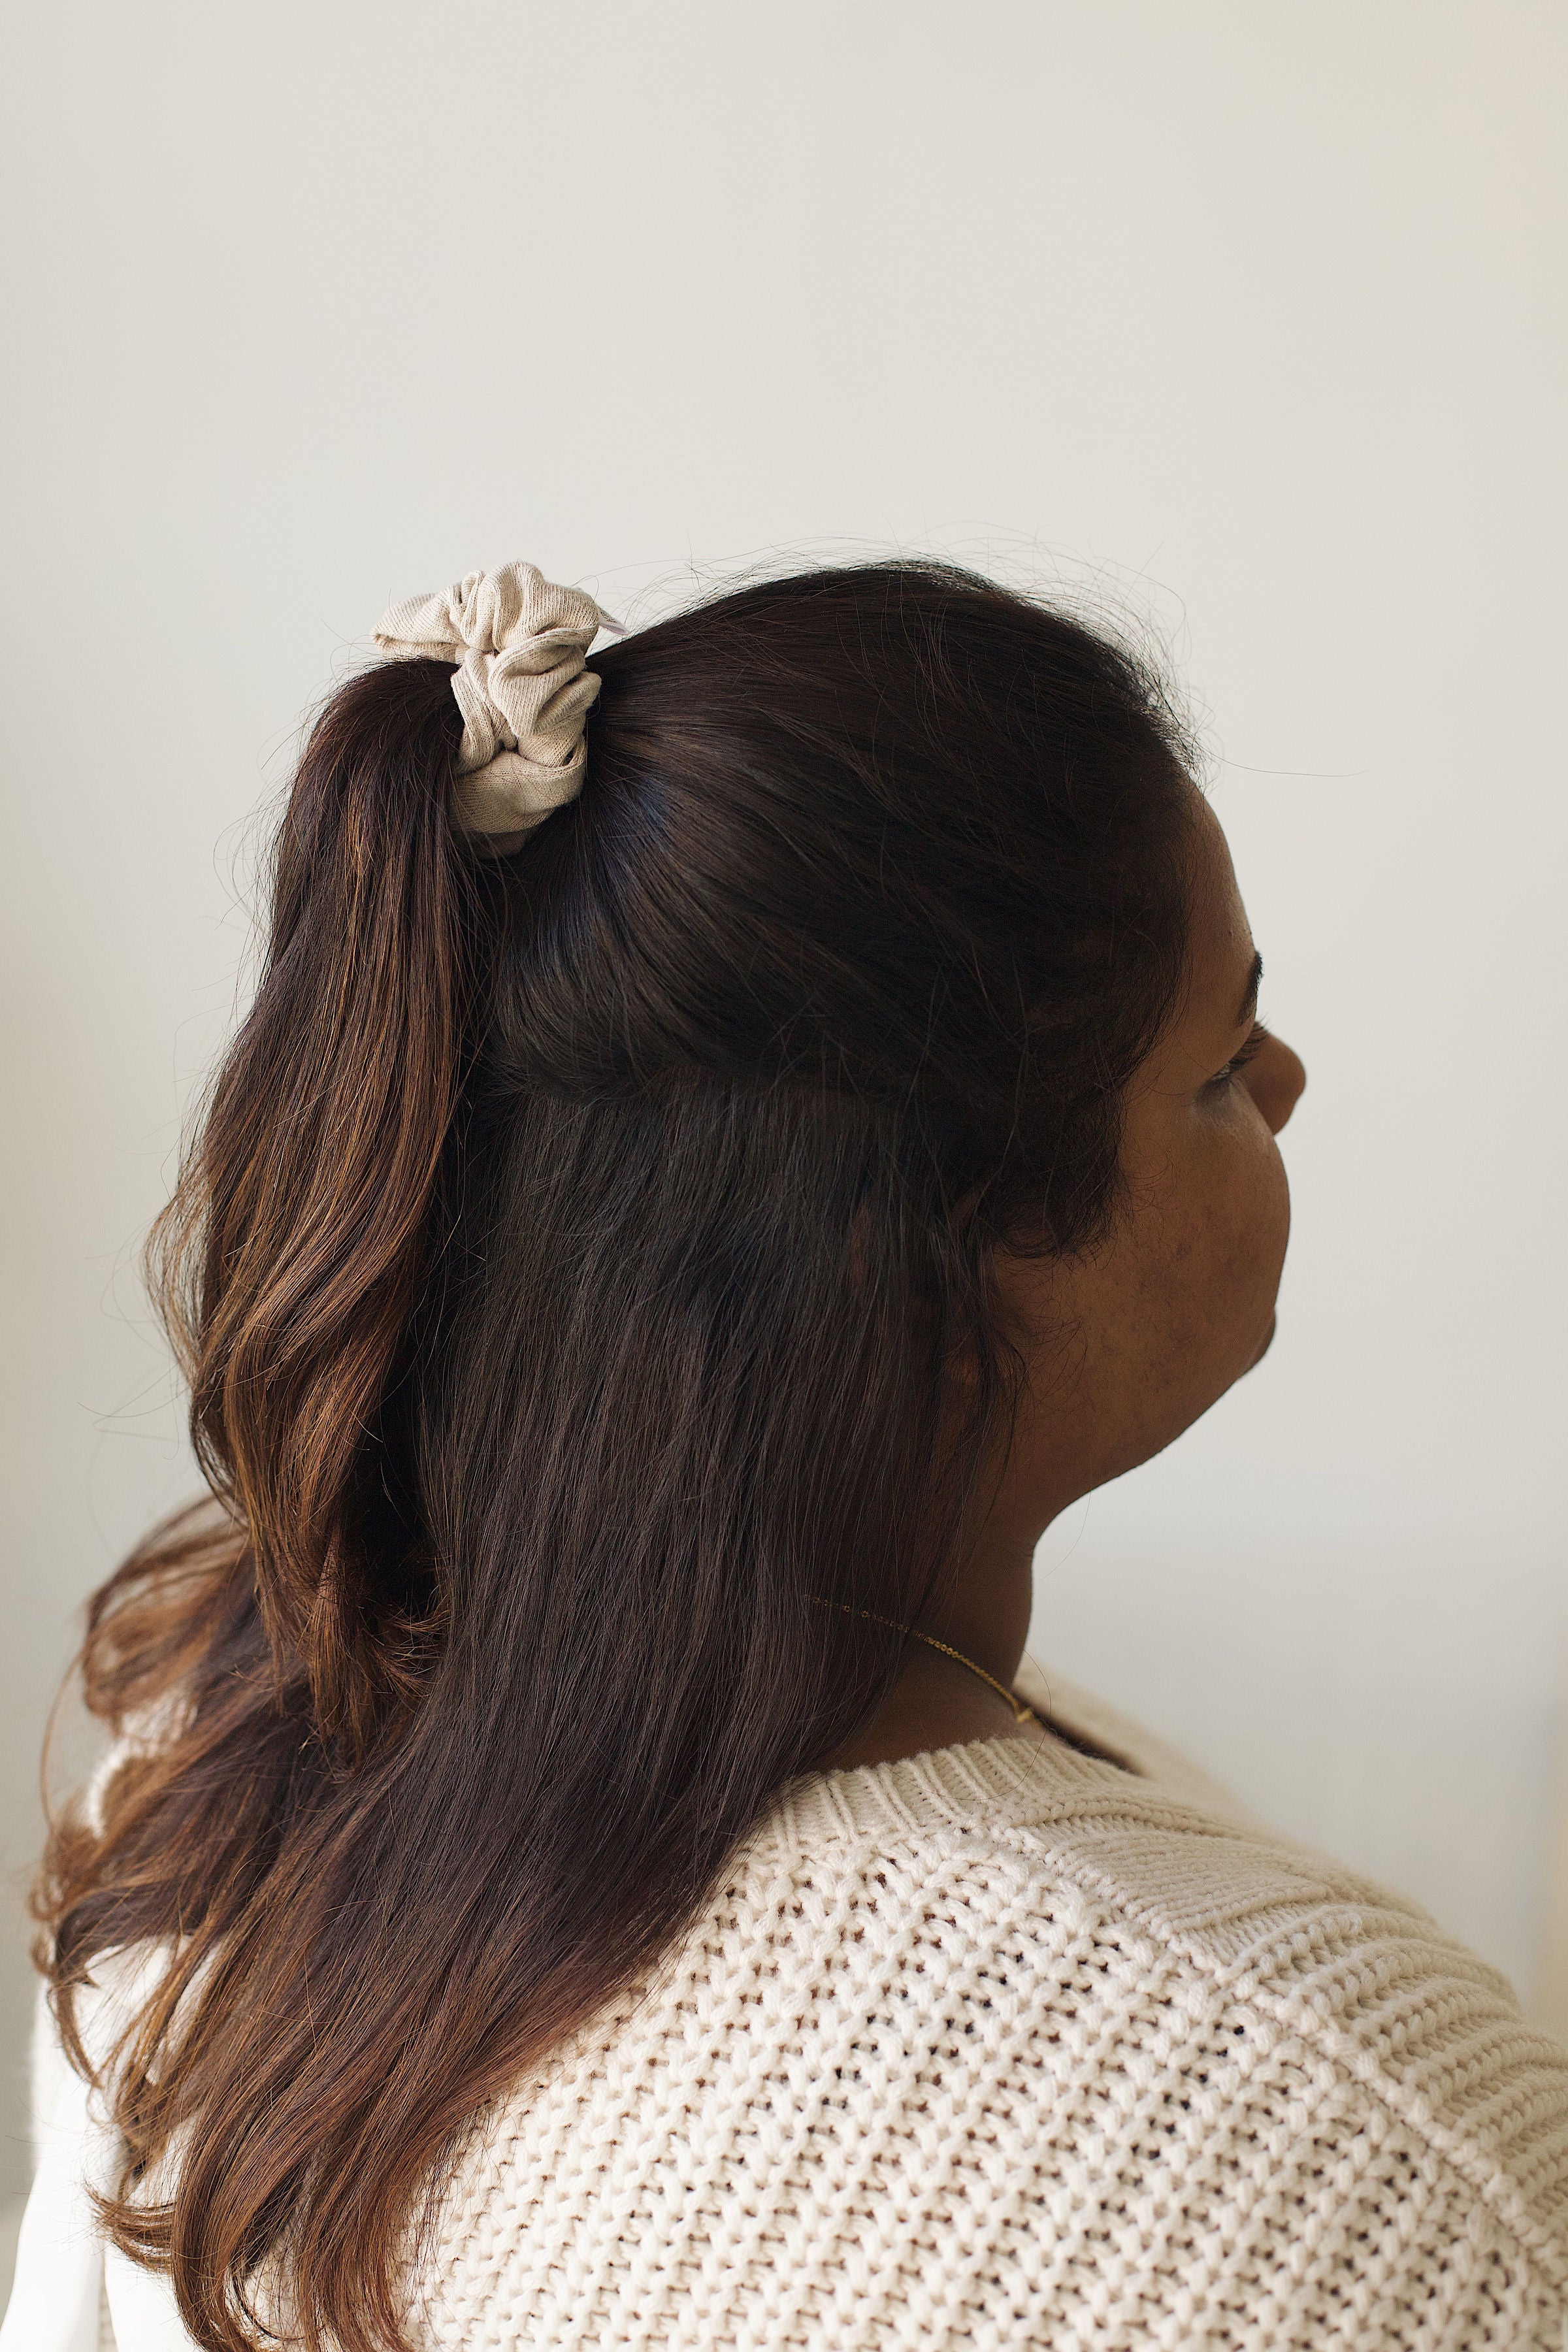 Cream Sweater scrunchie in Beau size in model's half up half down ponytail